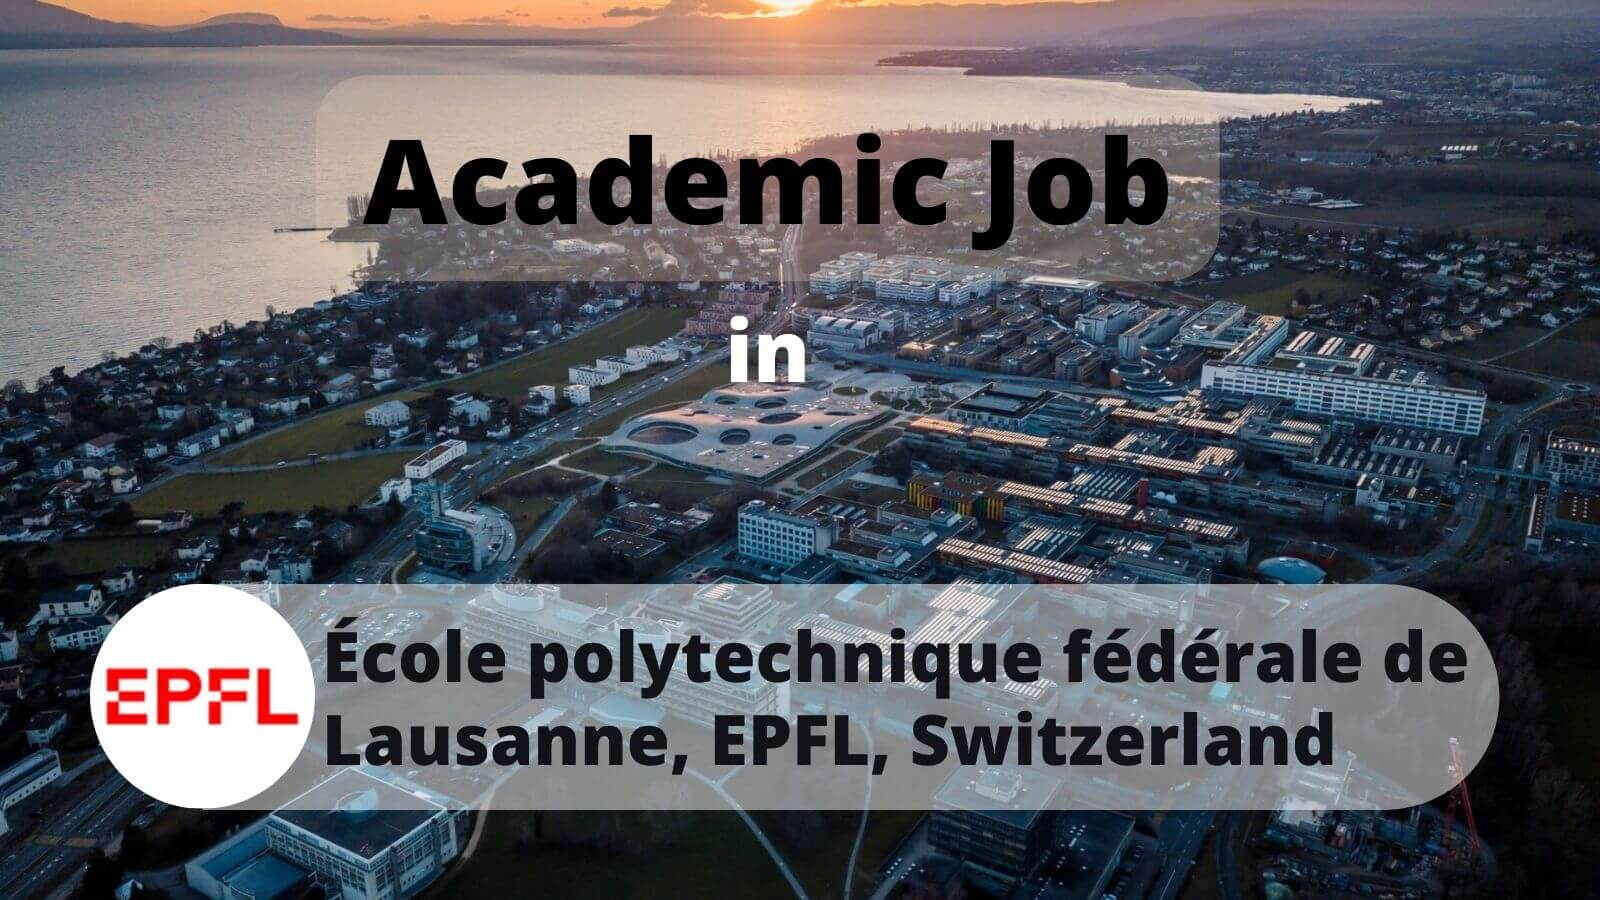 Academic job in EPFL Switzerland